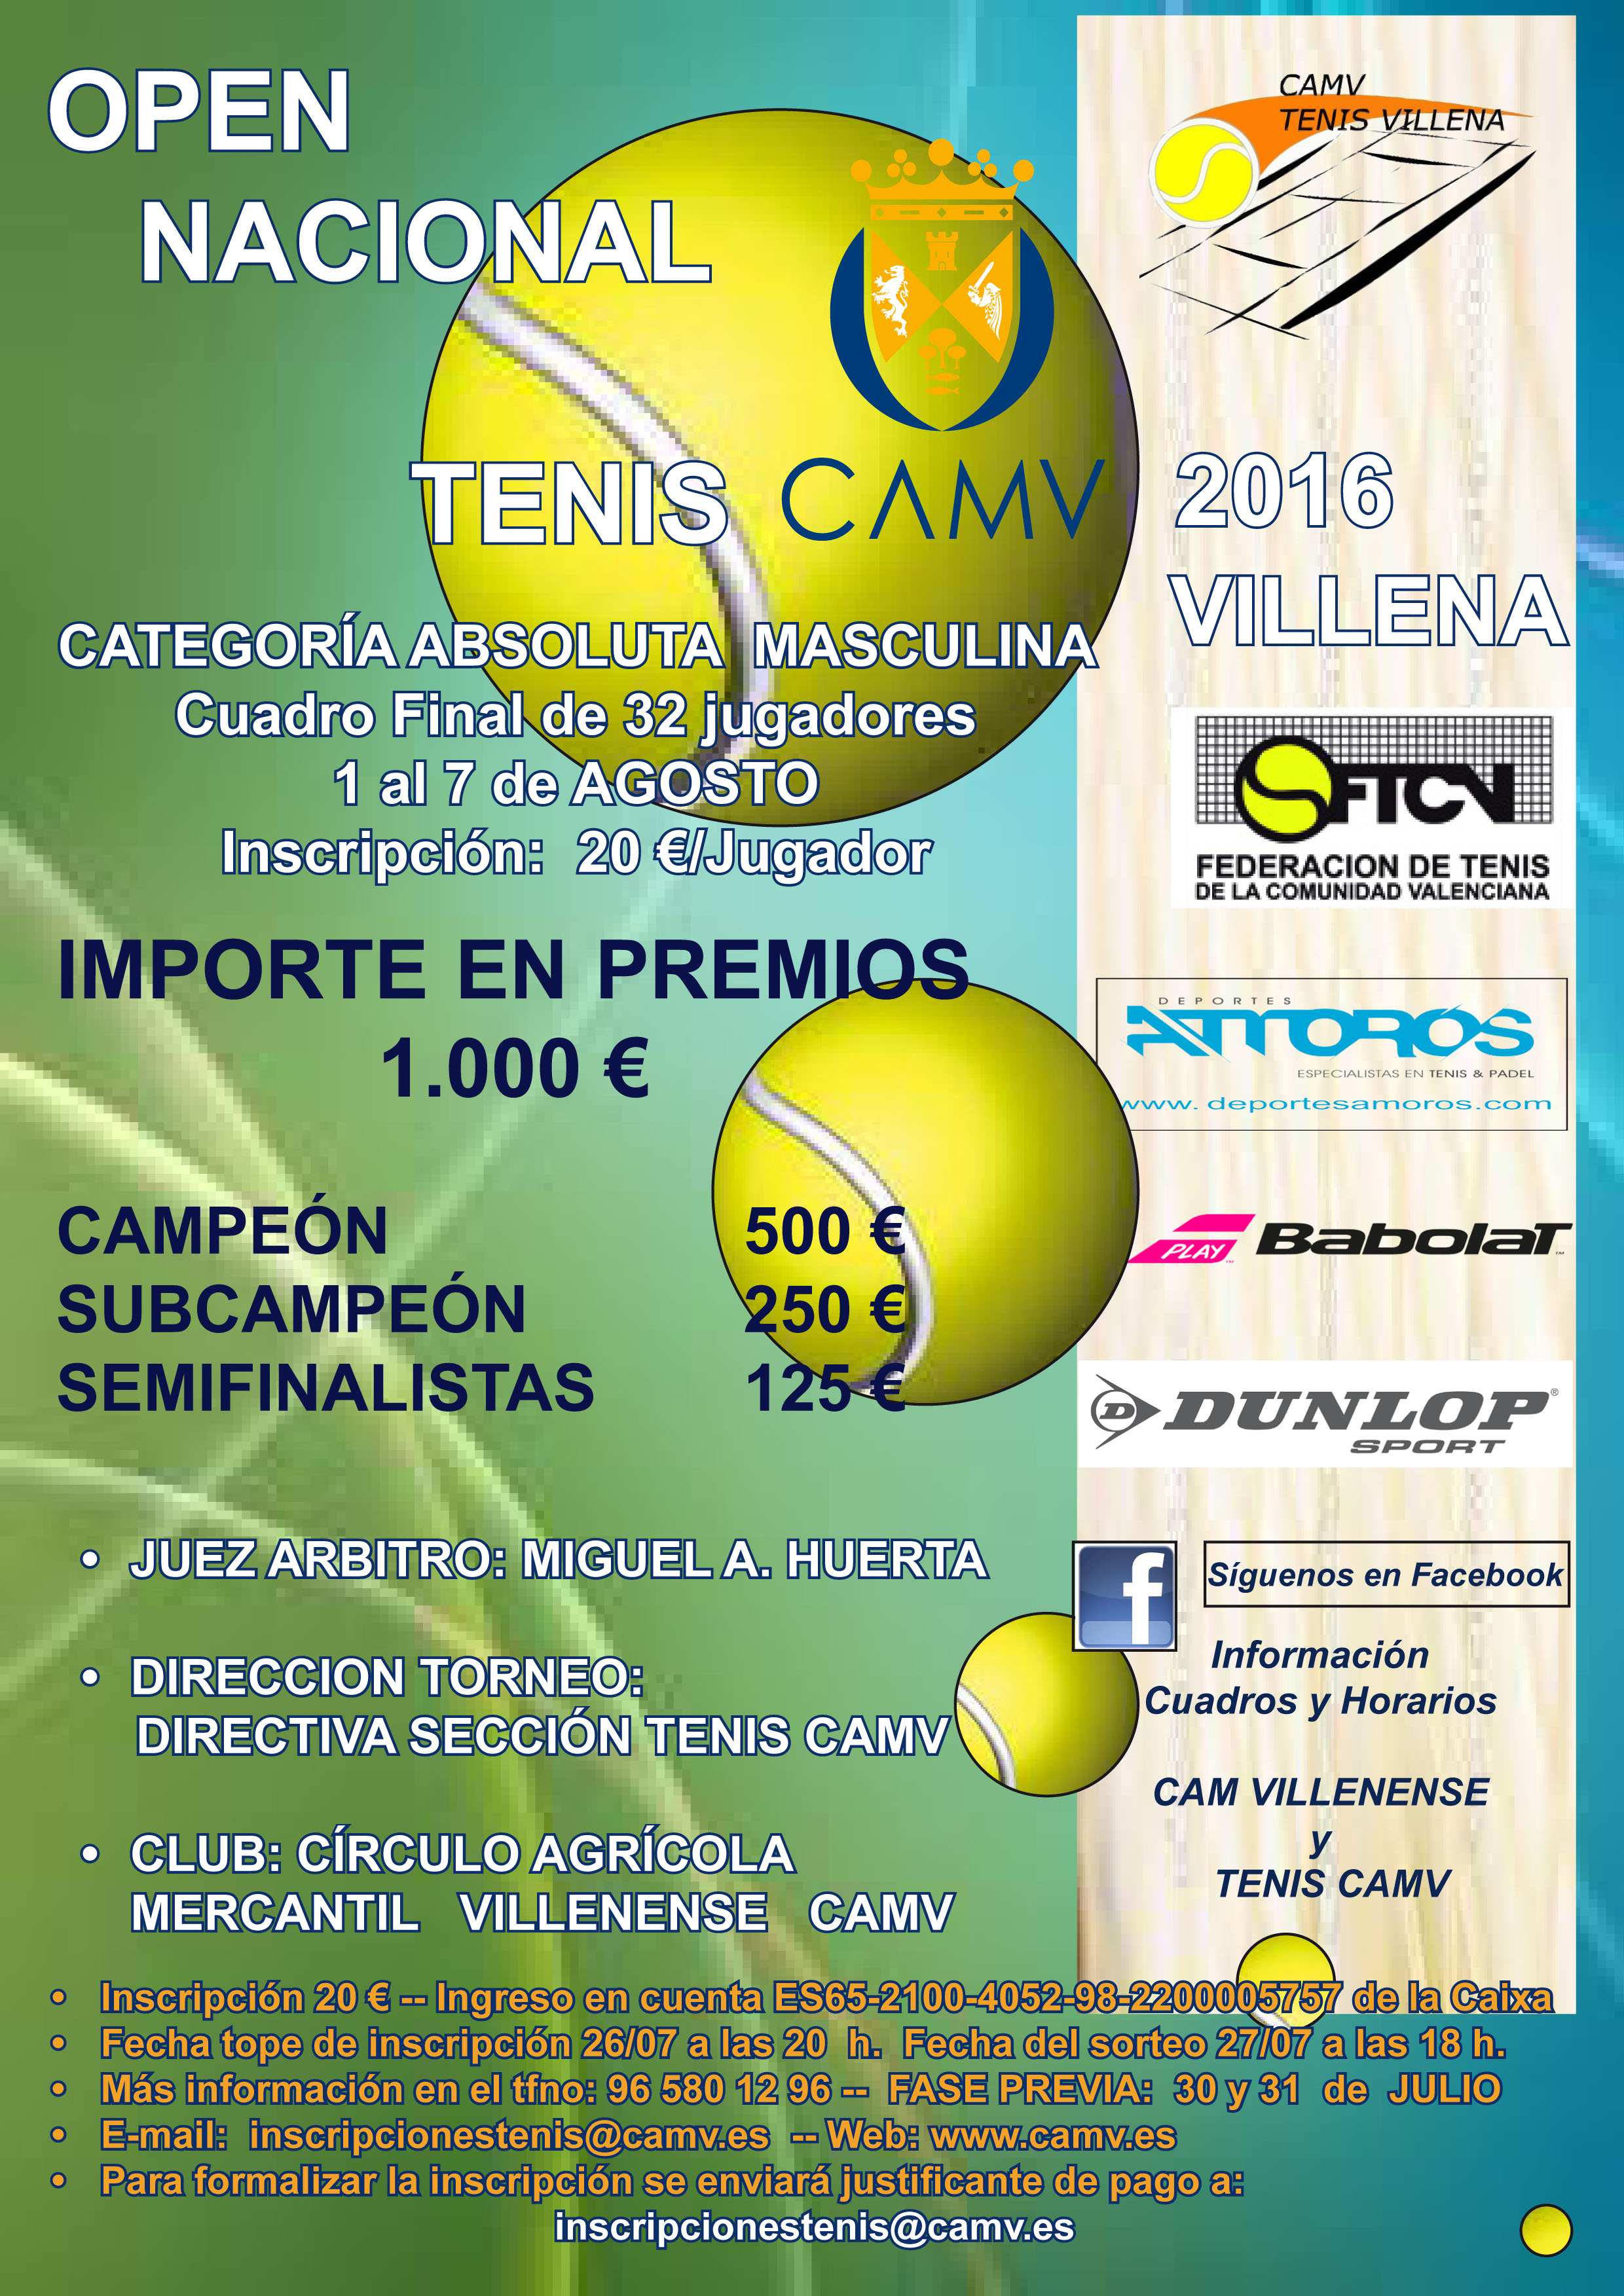 WEB_Cartel_Open_Nacional__Tenis16